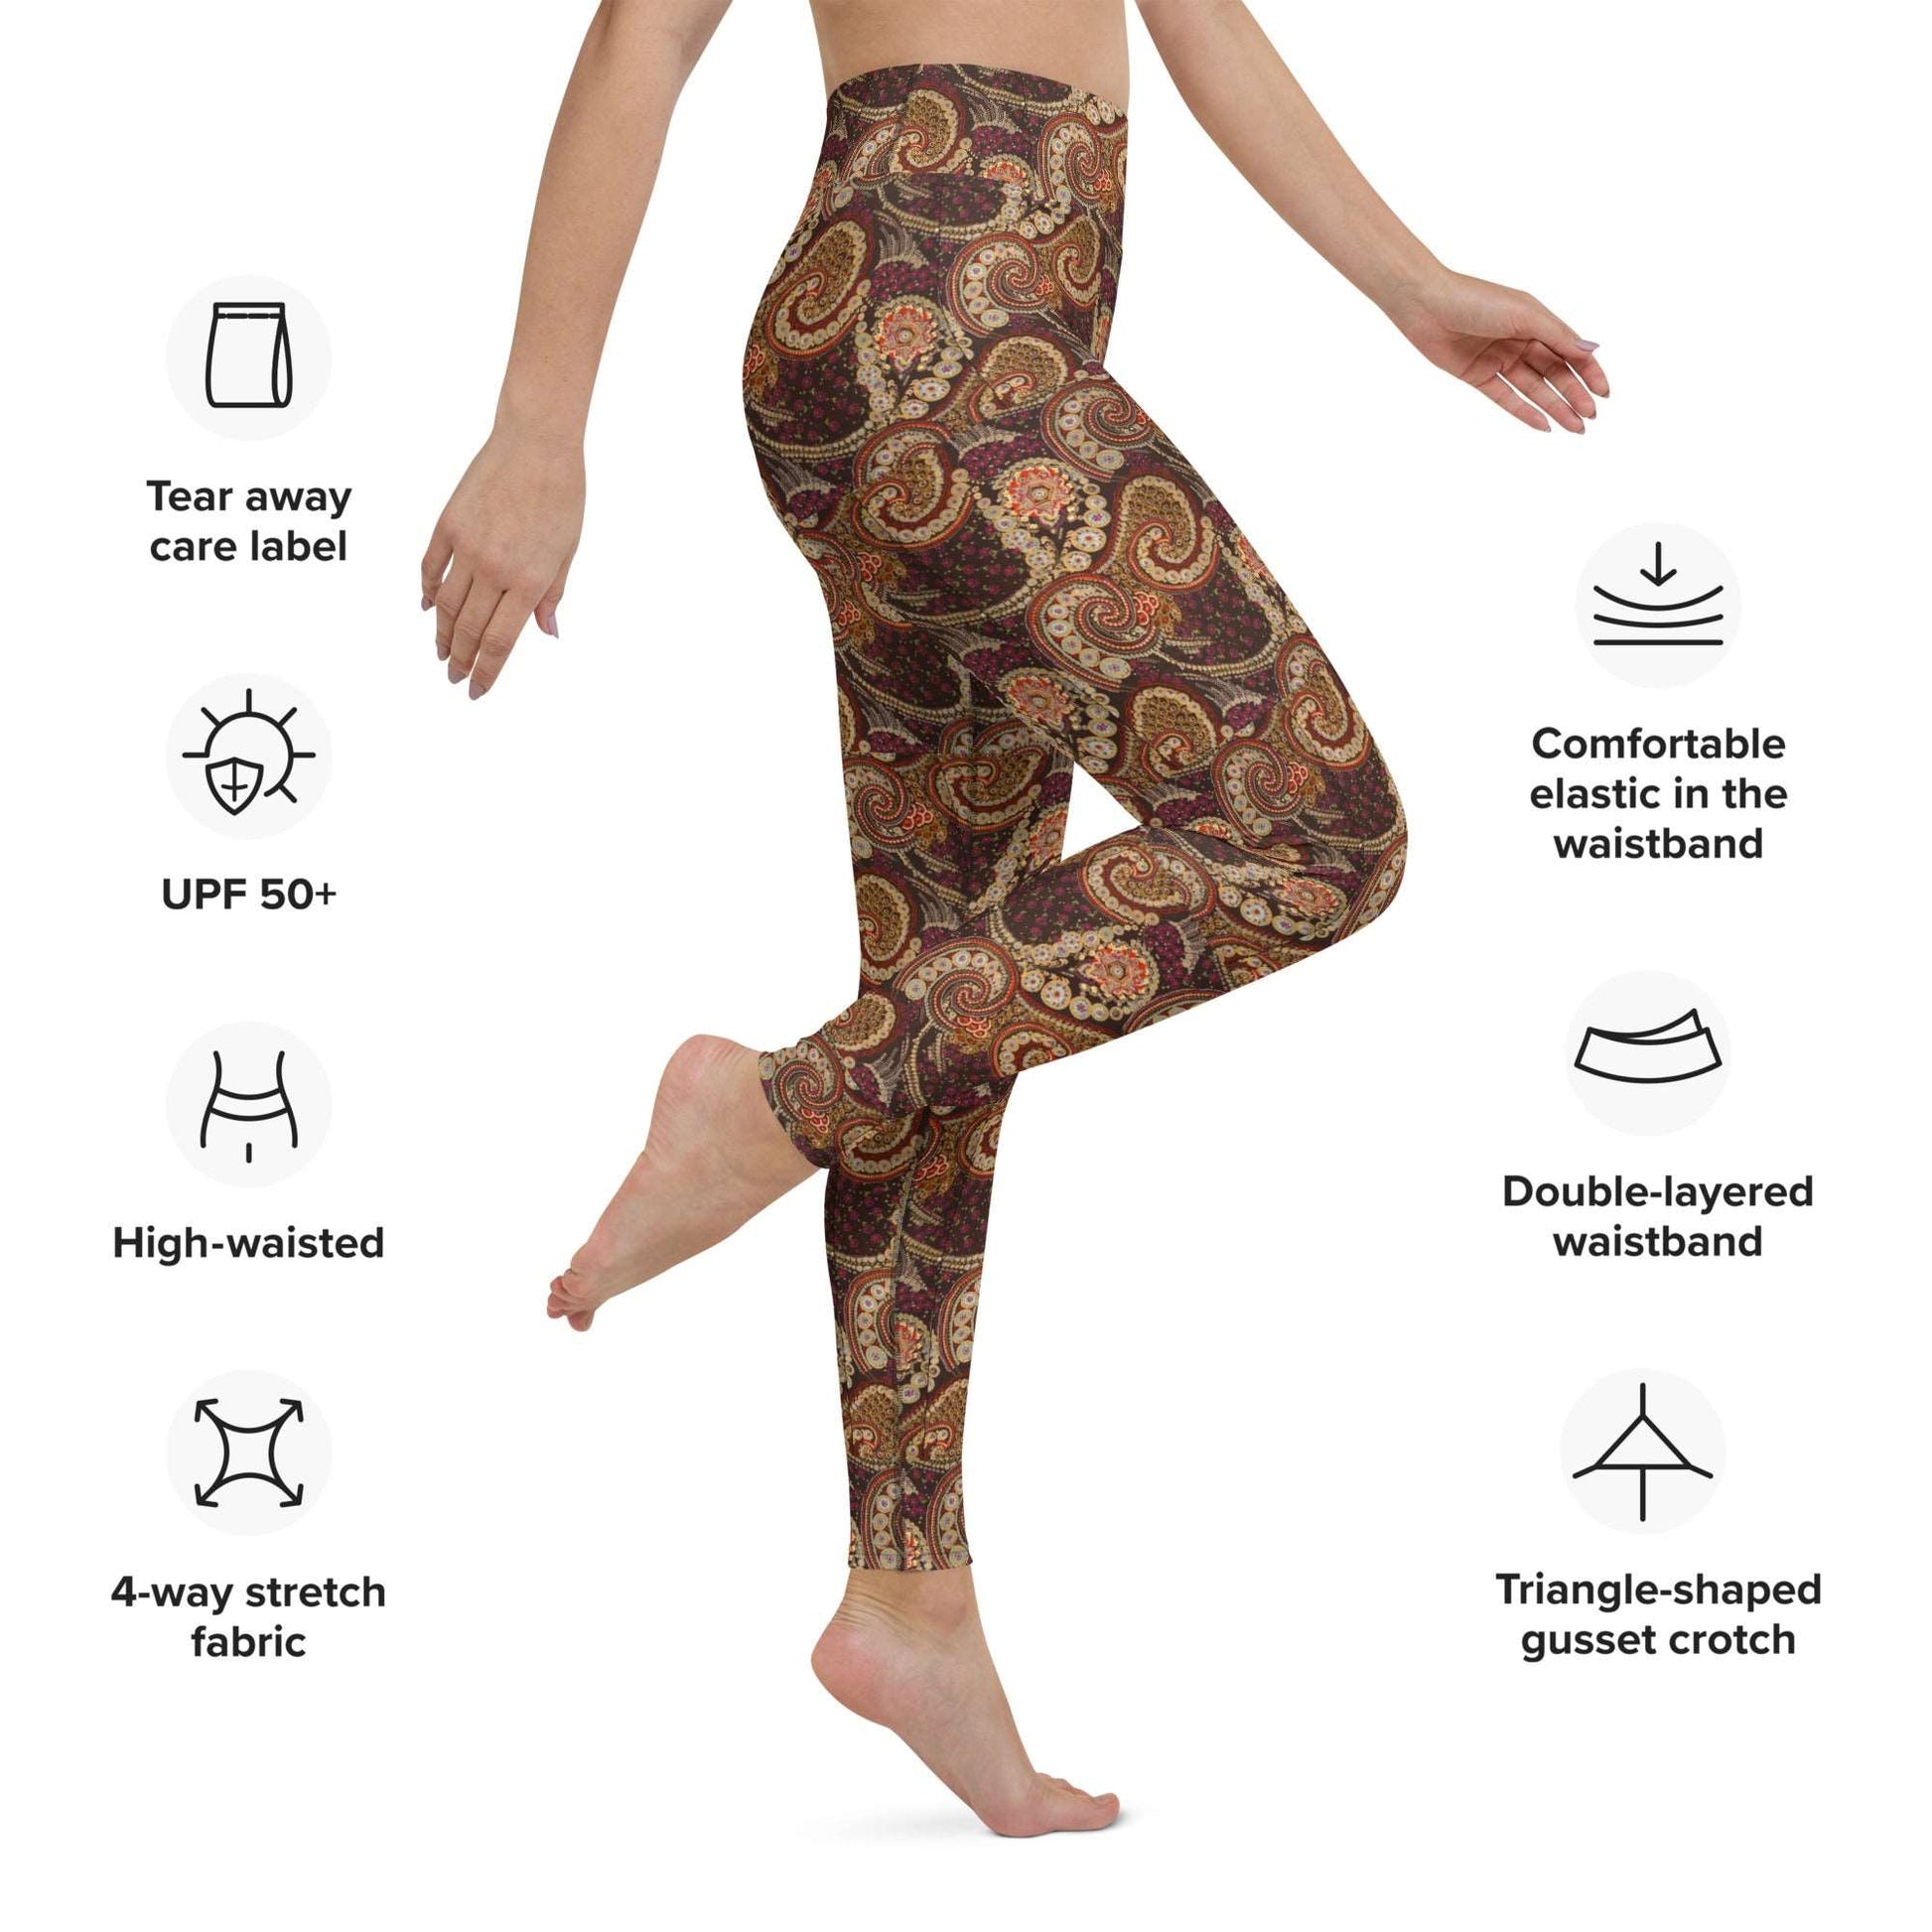 PaisleyZen Yoga Leggings - Brown/Orange Paisley Pattern, Classic Paisley, Festival Leggings, Yoga Leggings, Hippie Leggings